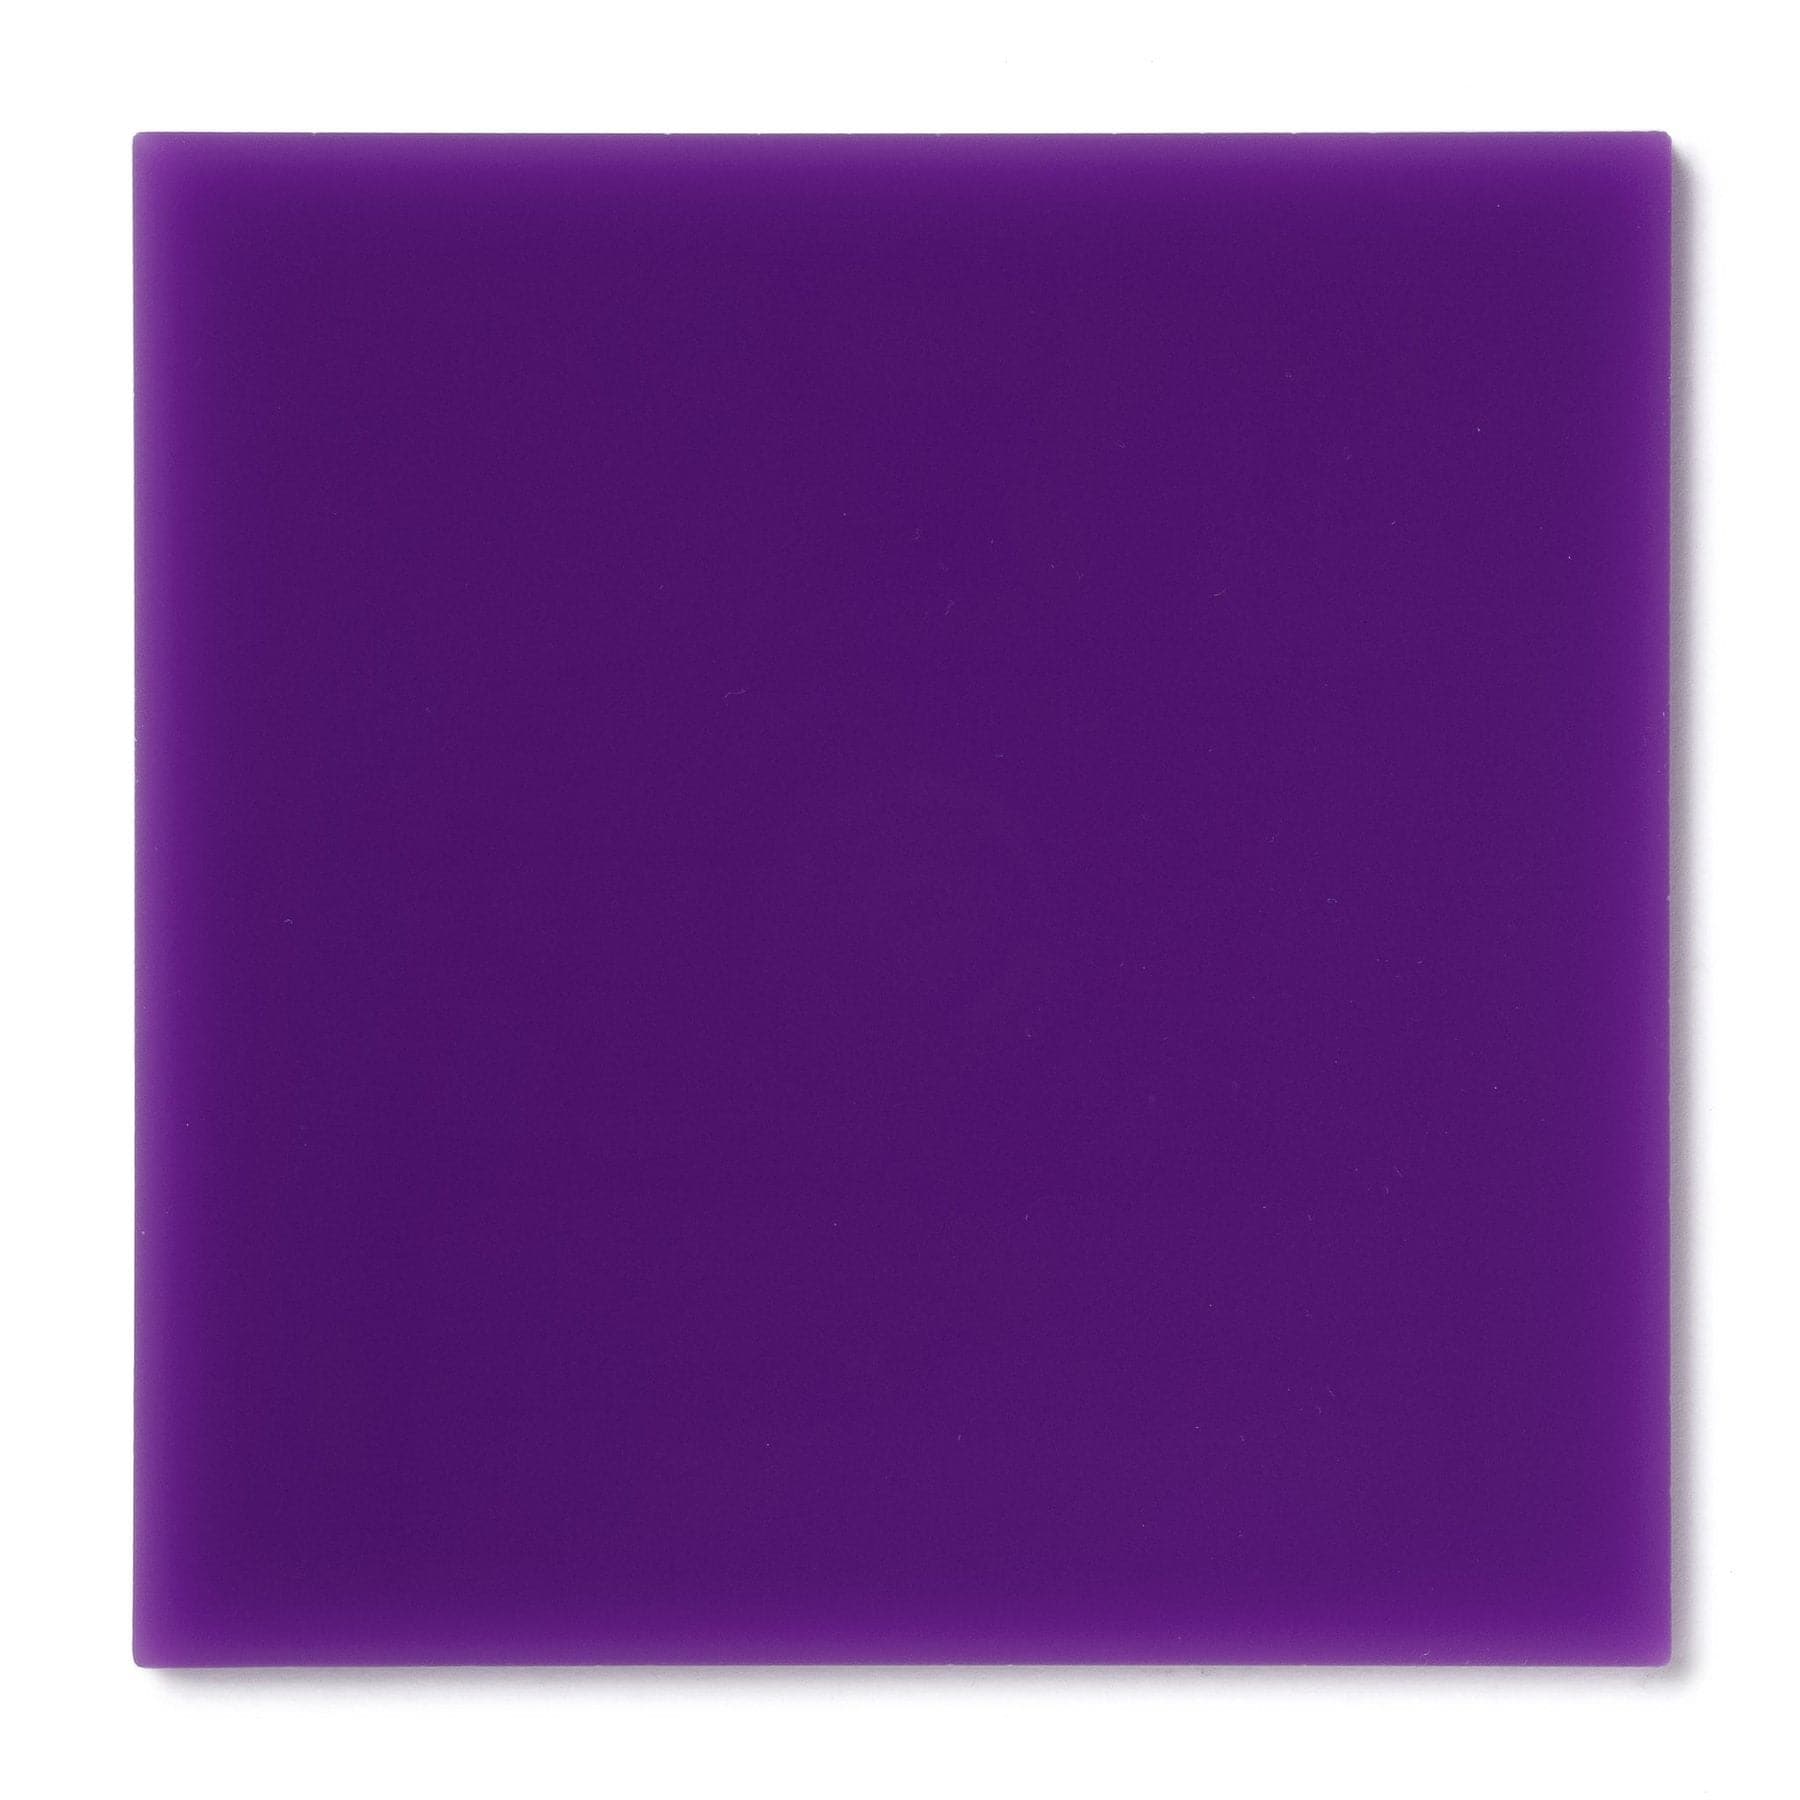 Acrylic Sheet 1/8" Purple Translucent #2287